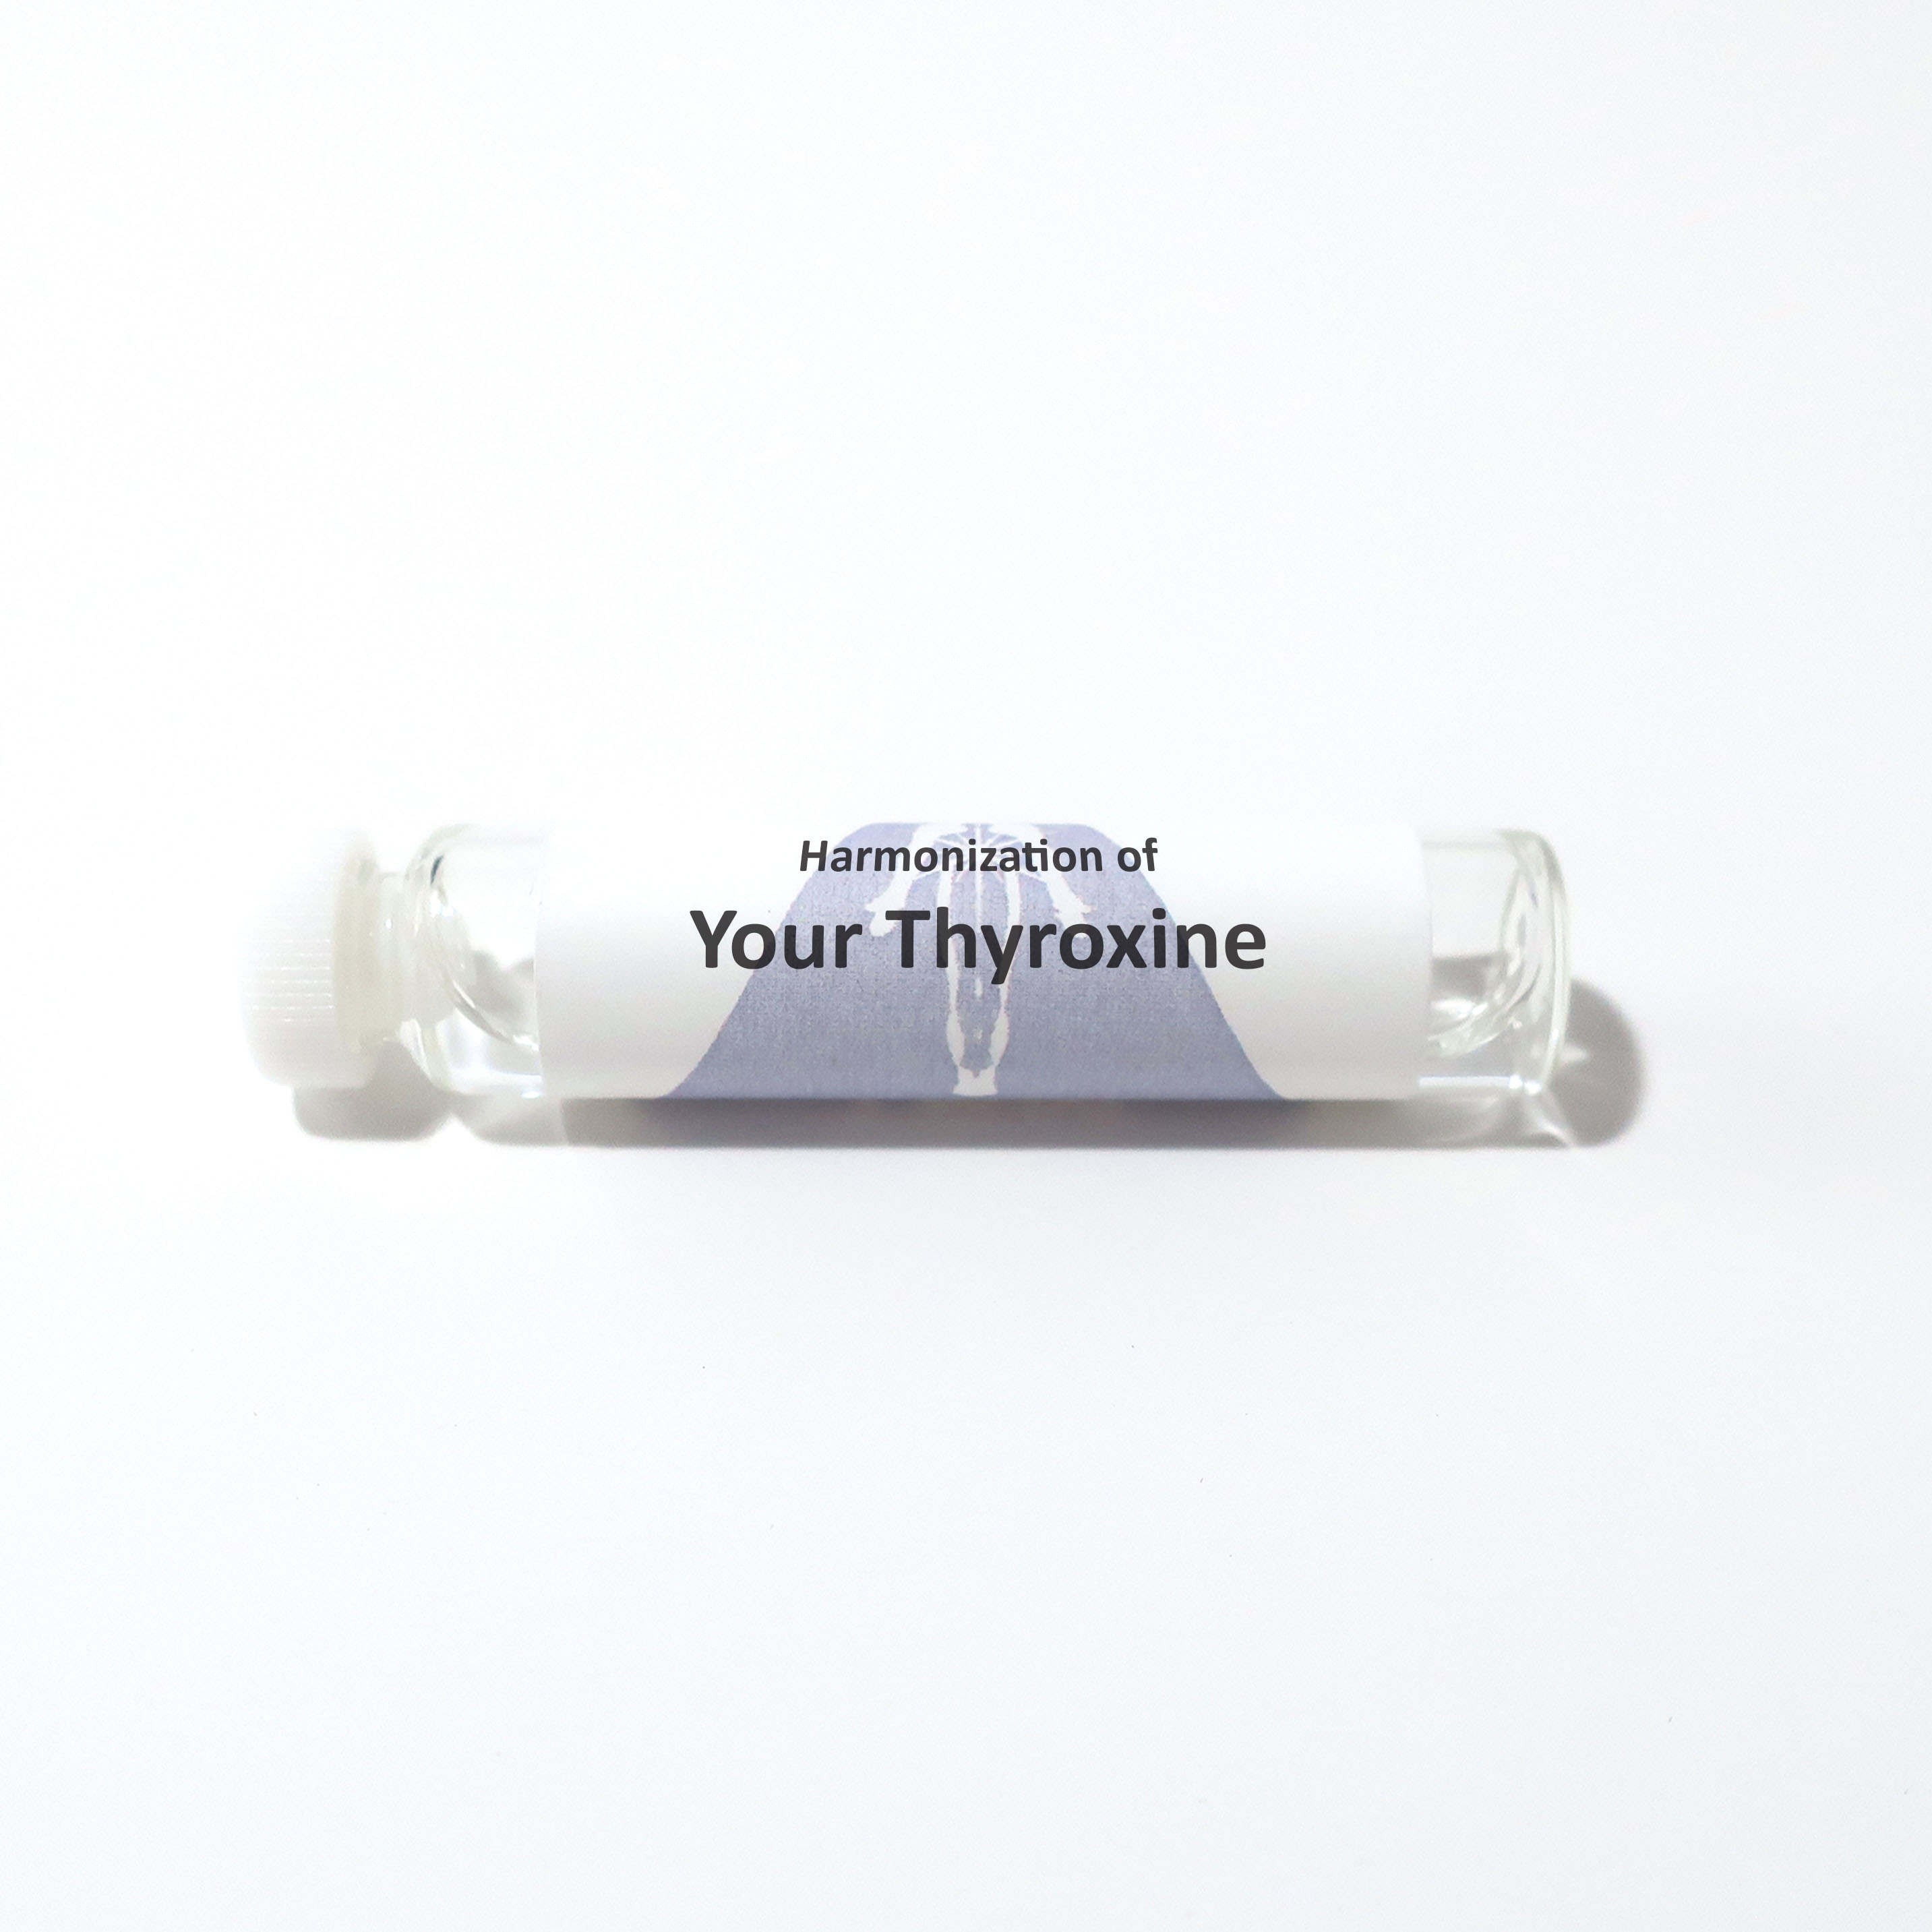 Your Thyroxine